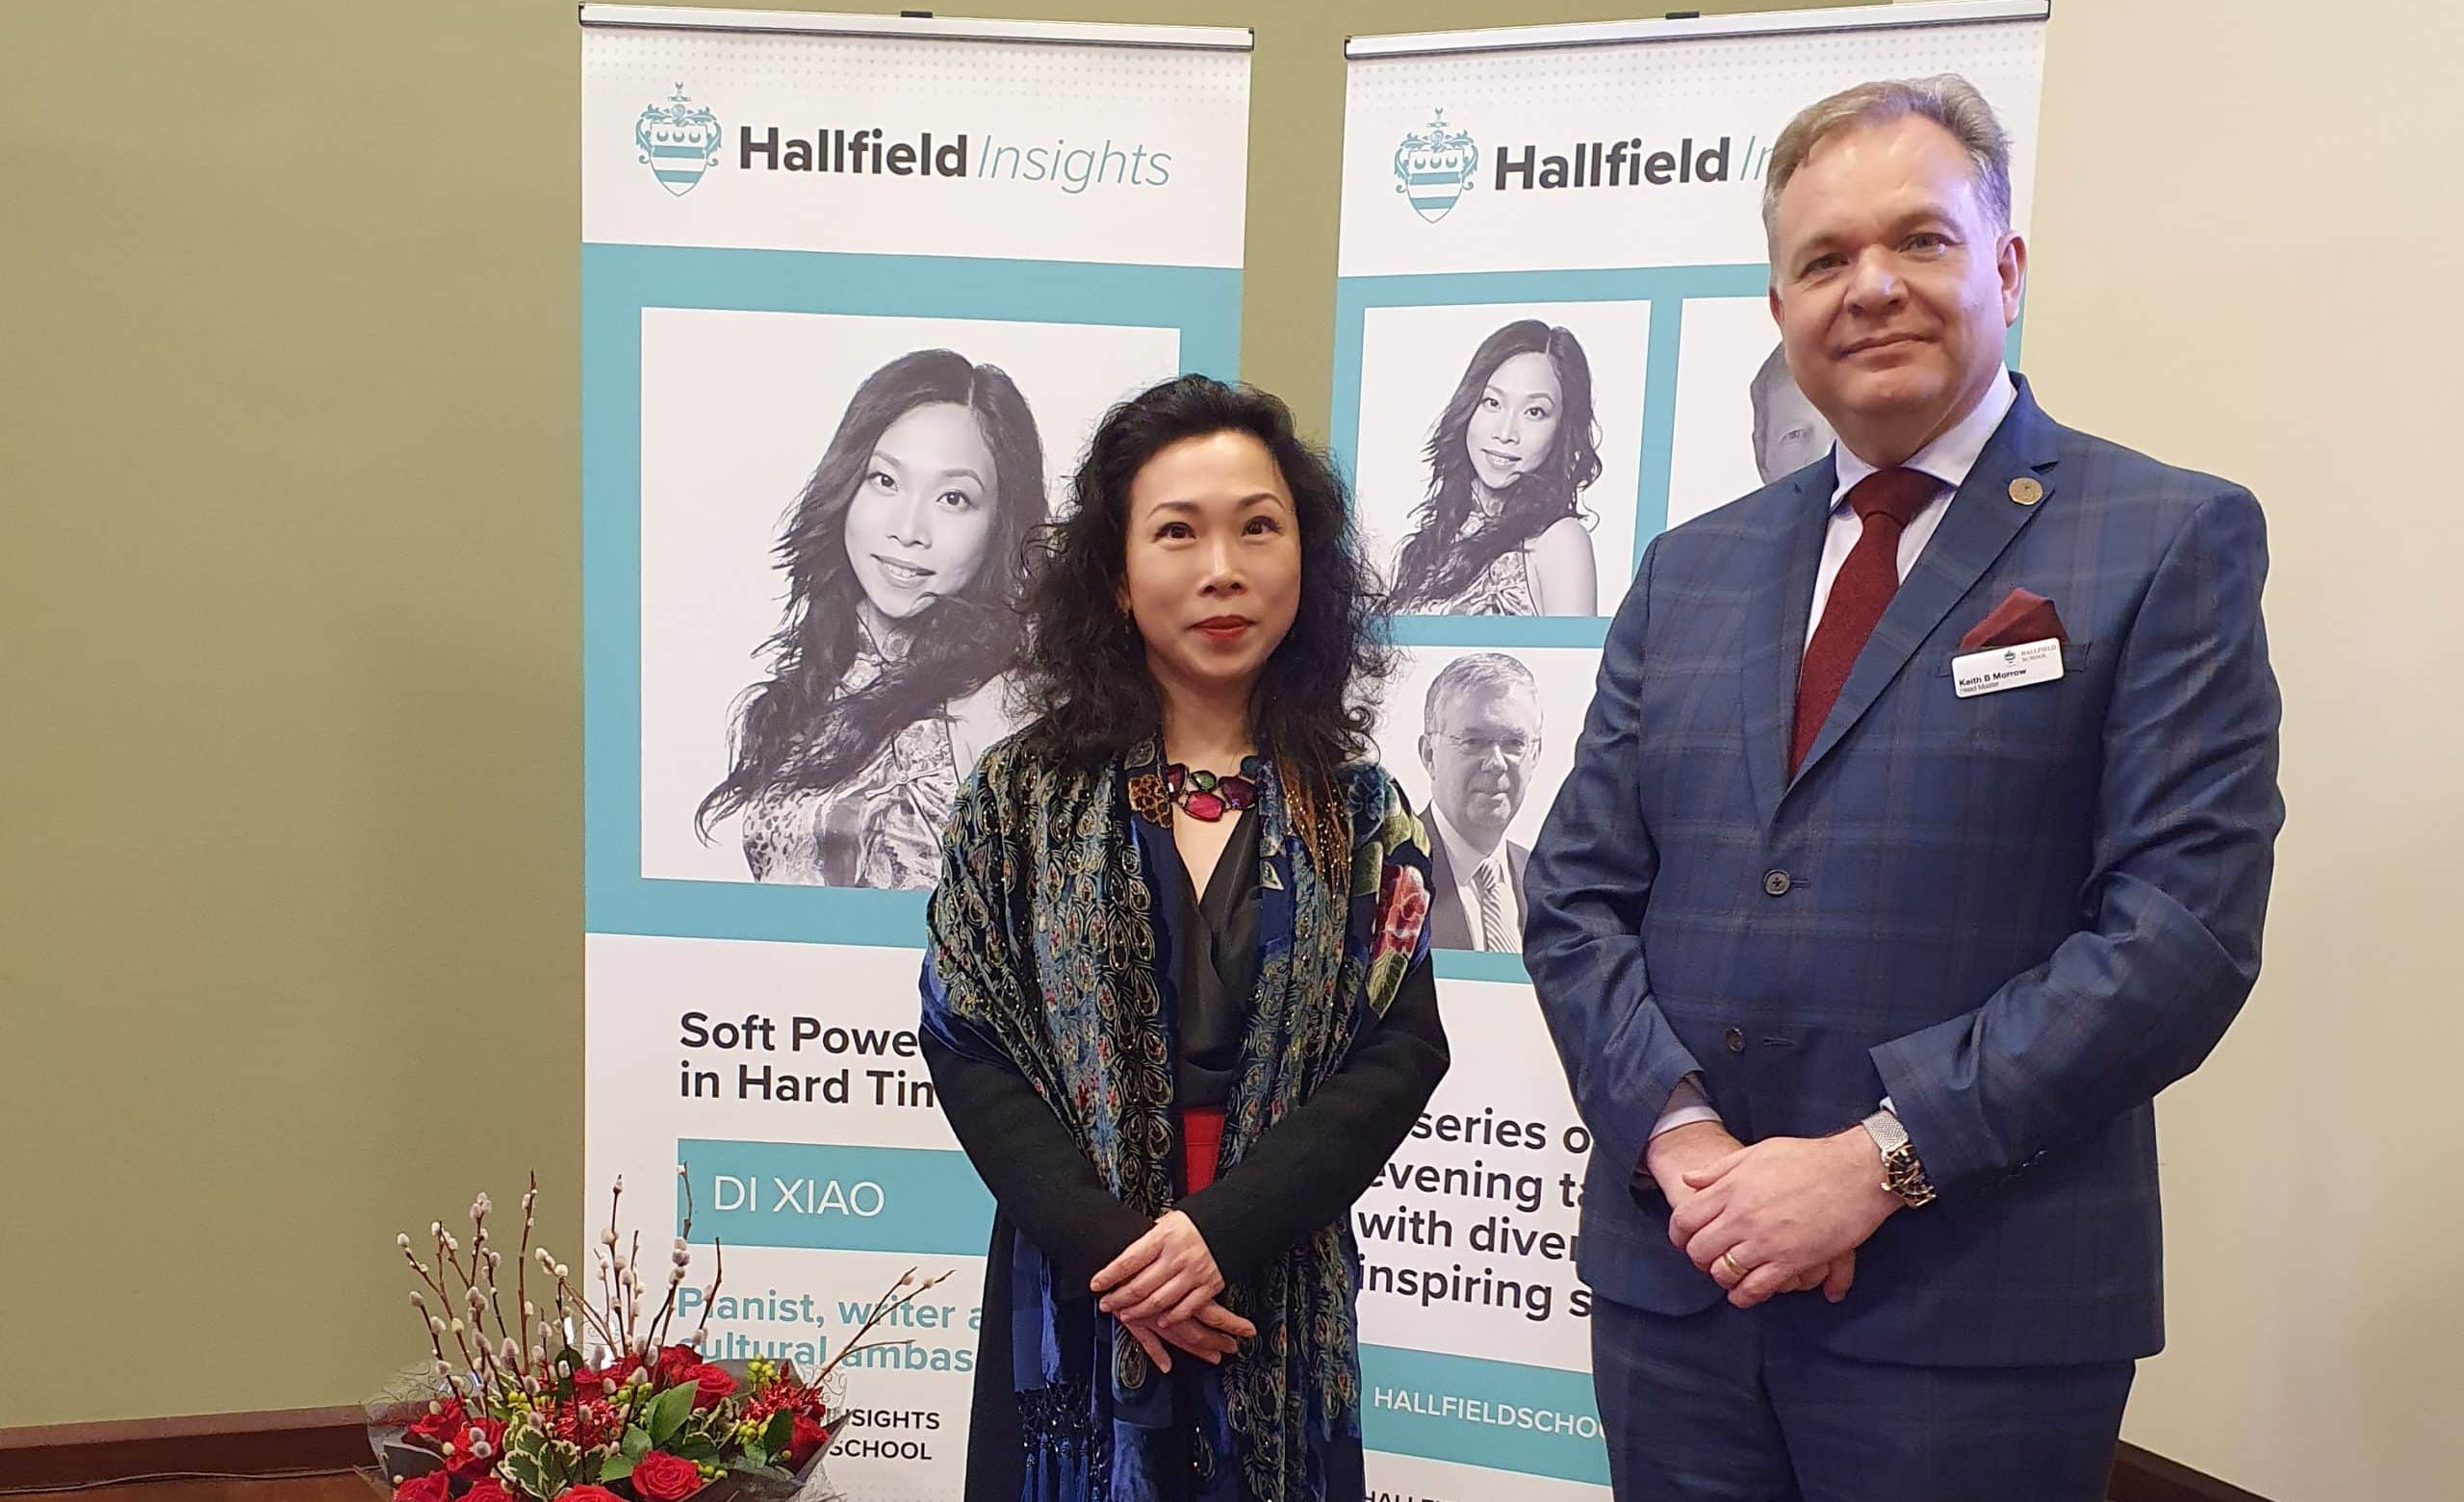 Di Xiao launches Hallfield Insights talk series